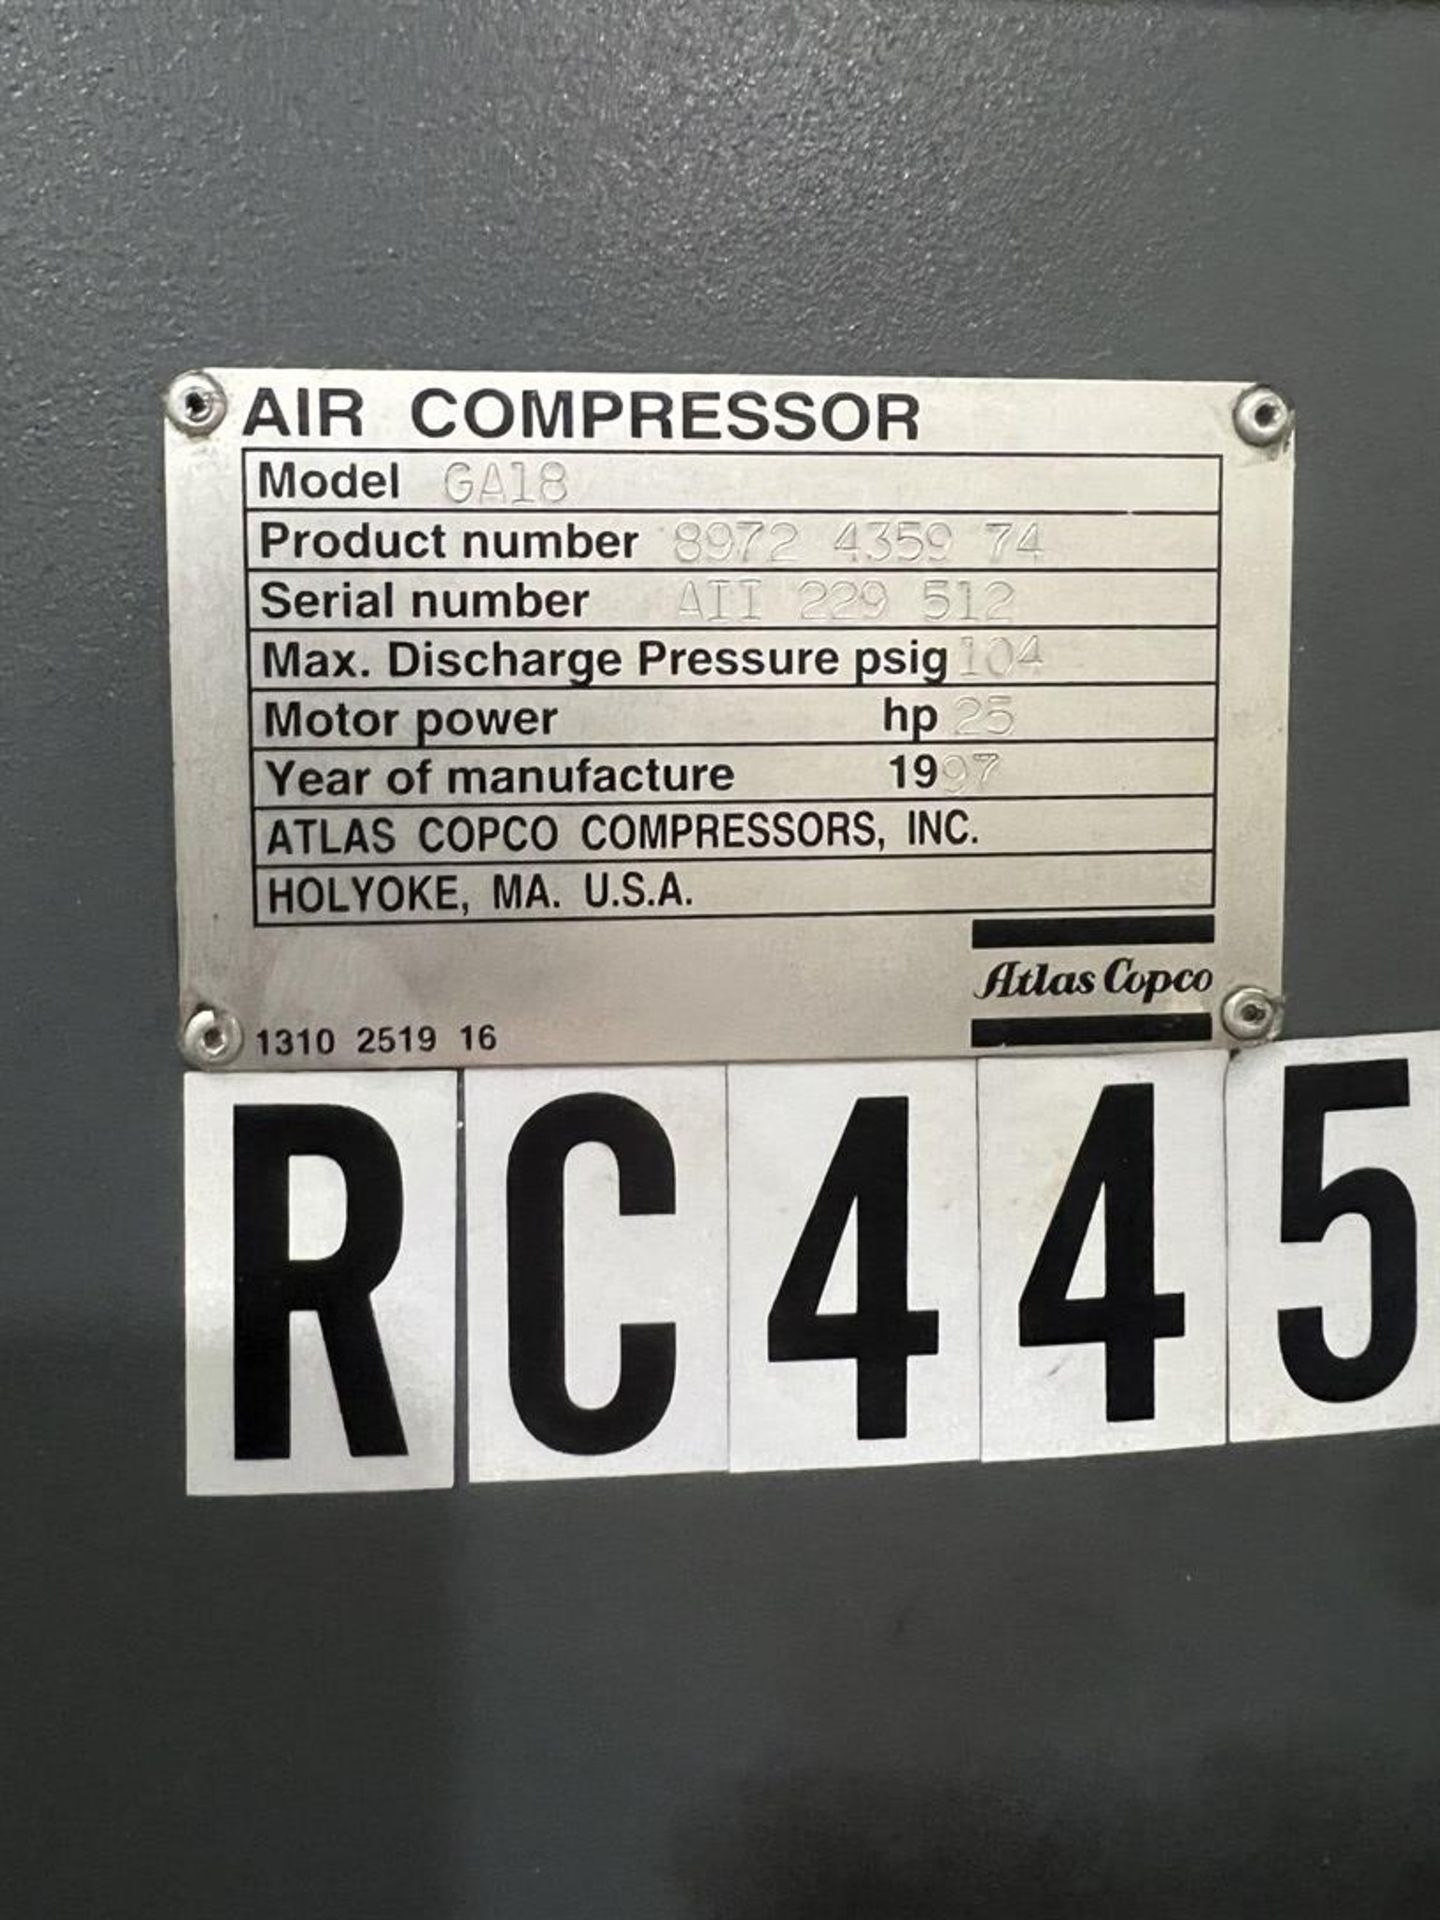 ATLAS COPCO GA18 Air Compressor, s/n AII229512, 25 HP, 104 PSI, Approx. 100 Gallon Air Tank - Image 5 of 6